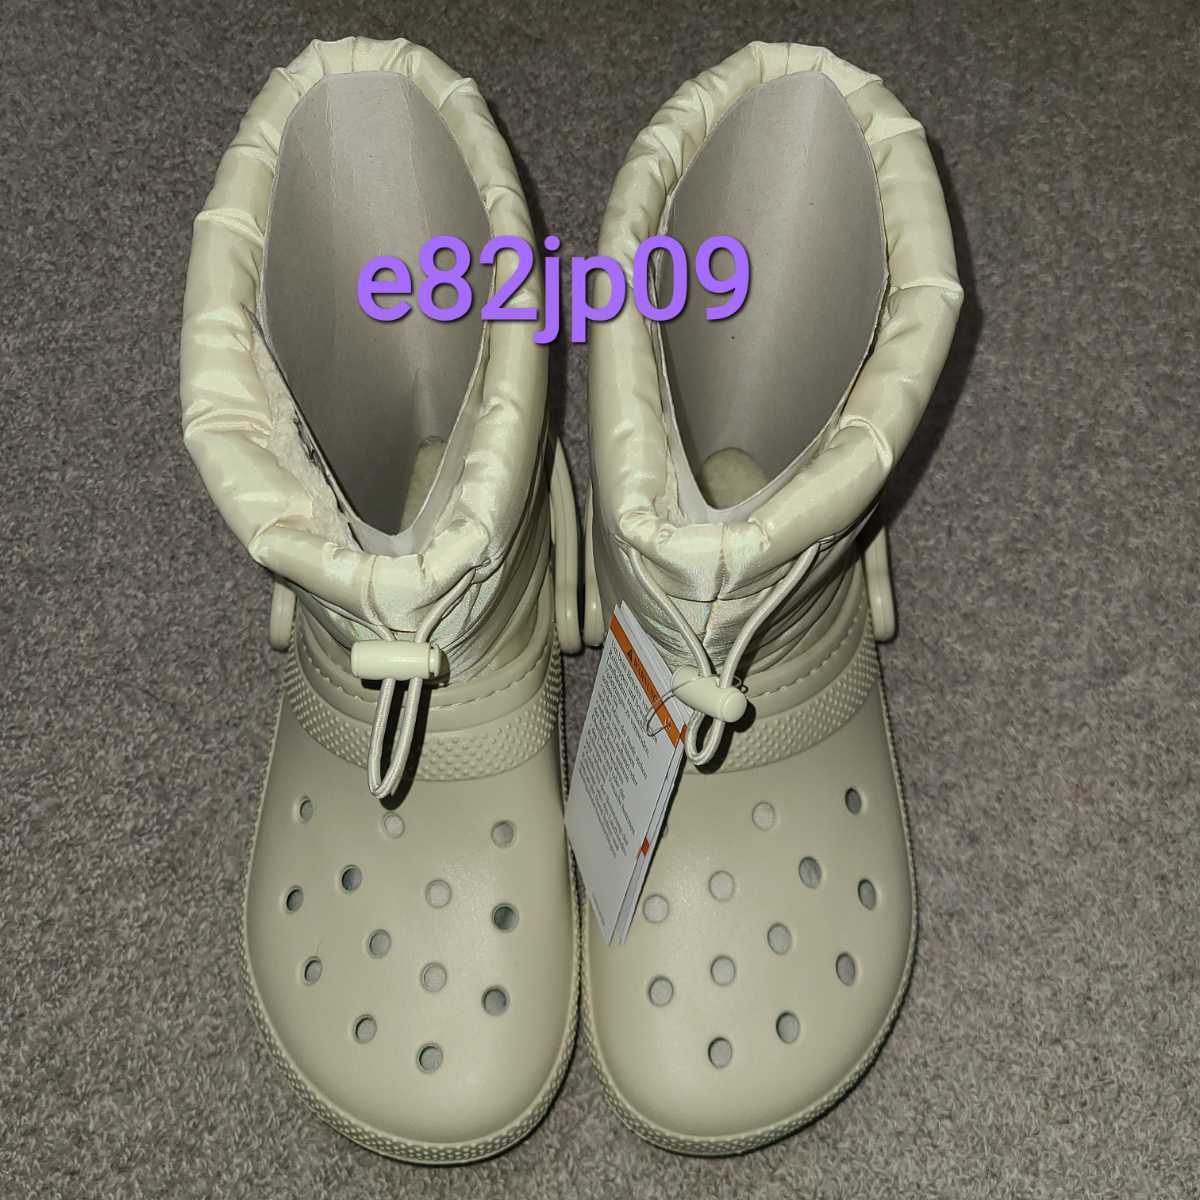 crocs m4 W6 для мужчин и женщин [ новый товар ] подлинный товар Crocs Classic la Индия Neo пуховка ботинки CLASSIC LINED NEO PUFF BOOT обычная цена 11,000 иен стандартный товар 